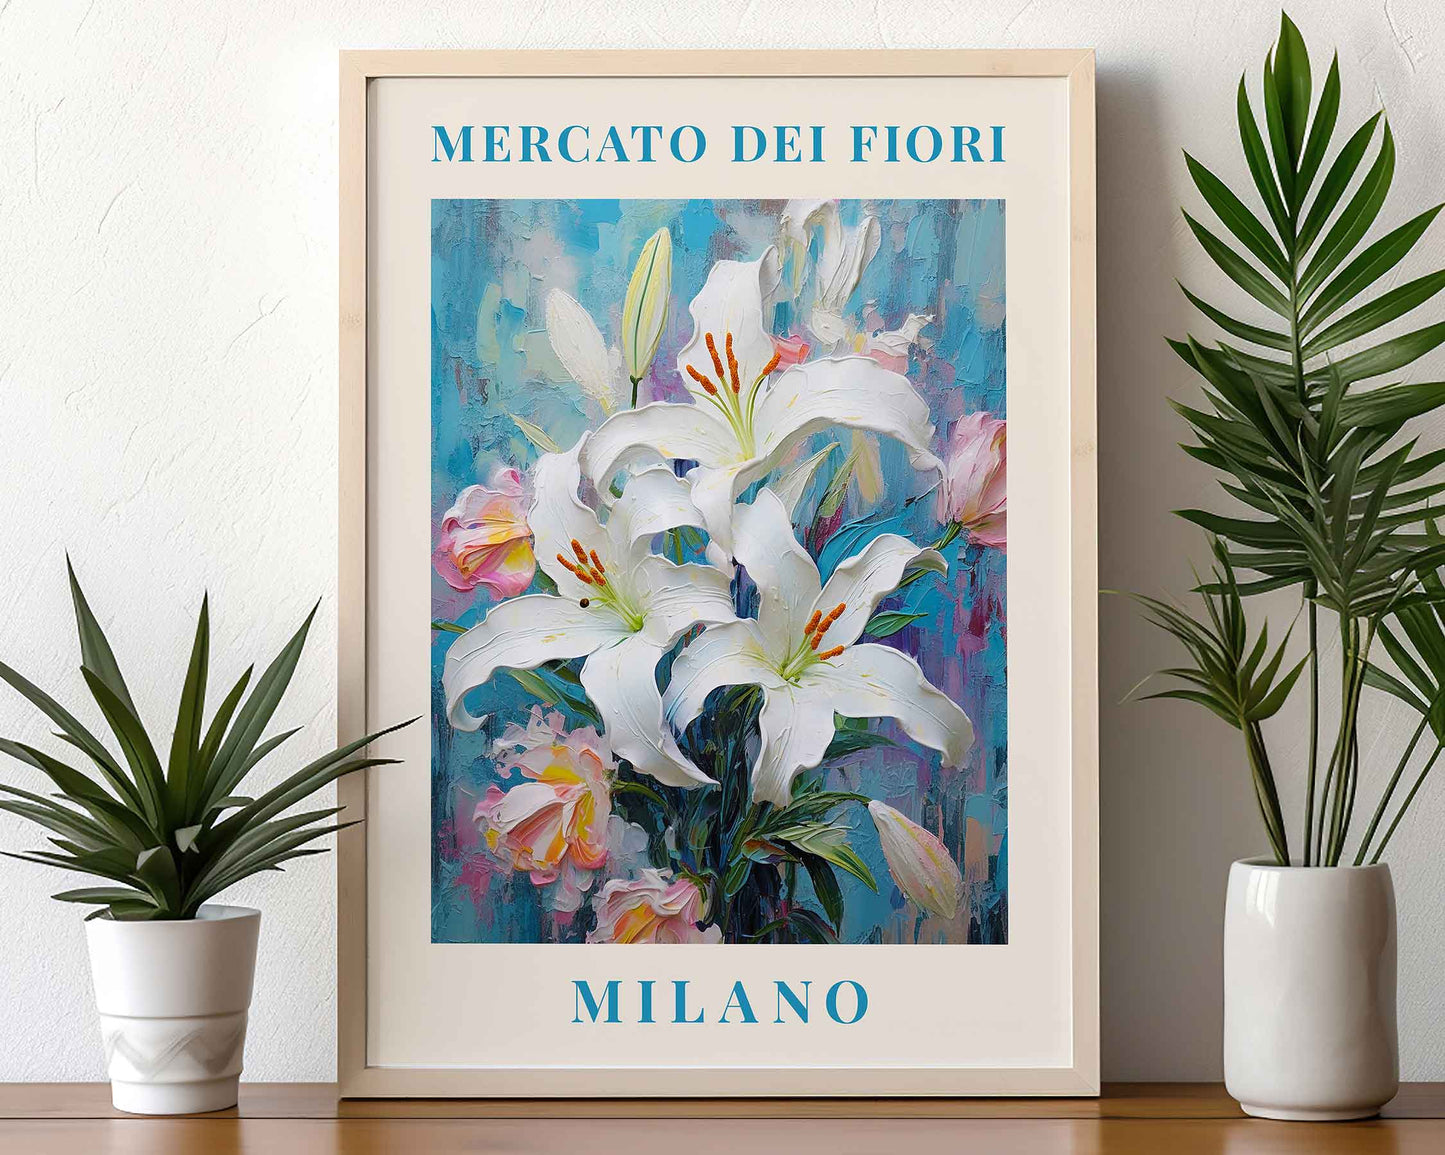 Framed Image of Milan Flower Market Prints Botanical Boho Vintage Painting Wall Art Posters